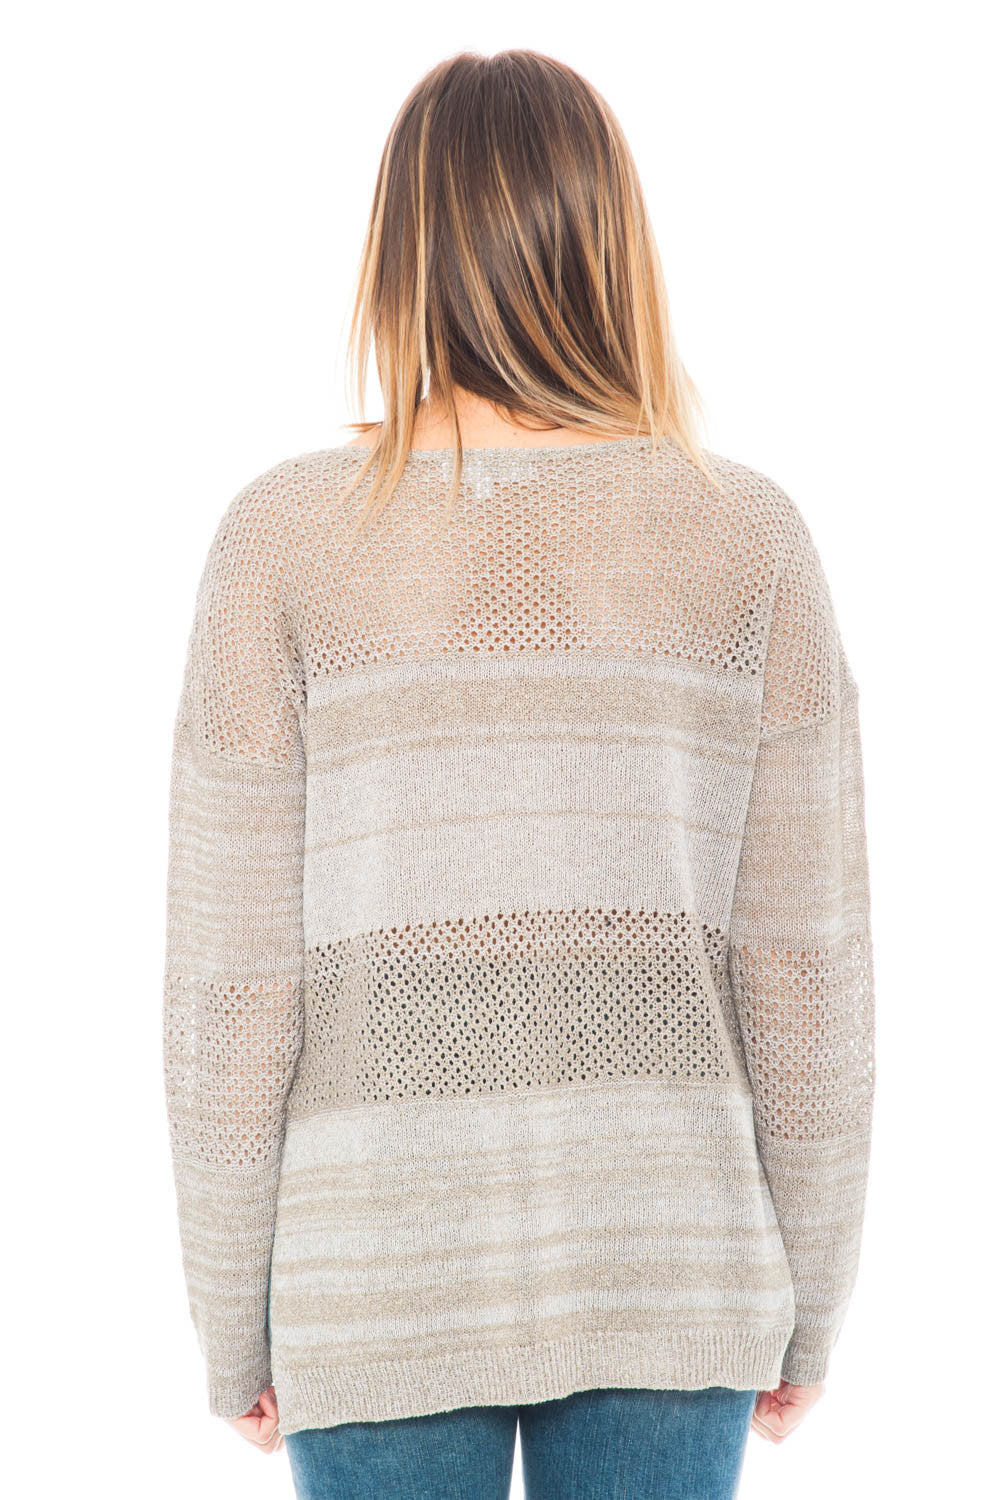 Sweater - Alford by BB Dakota High Low Sweater